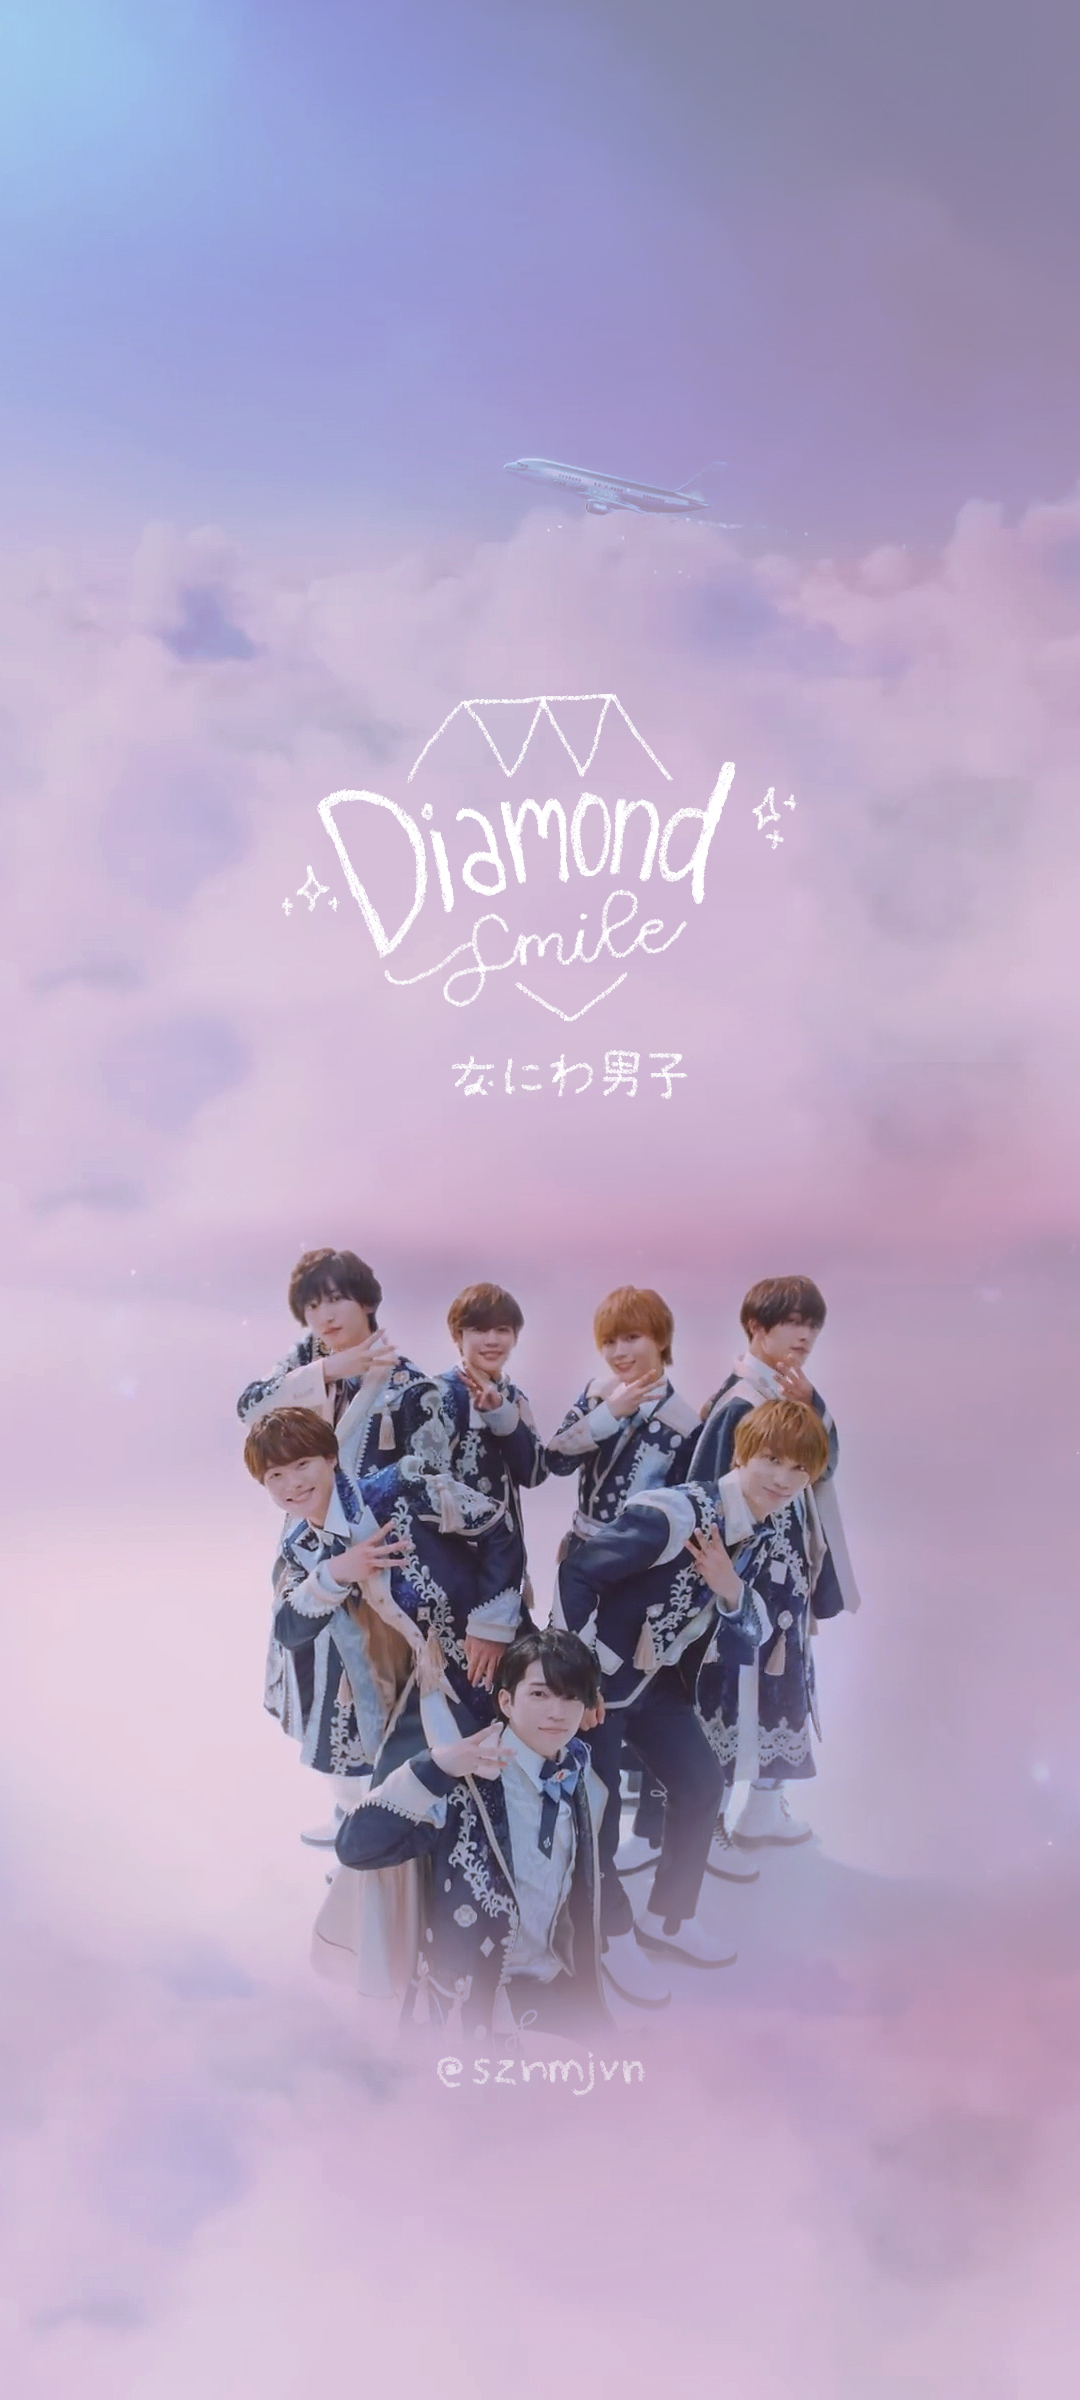 ᴍ ɪɴᴛ Sur Twitter Naniwa Danshi Diamond Smile Mv Nagao Kento Phone Wallpaper Lock Screen Made By Me Sznmjvn Kirishima198 Feel Free To Use Like Rt If